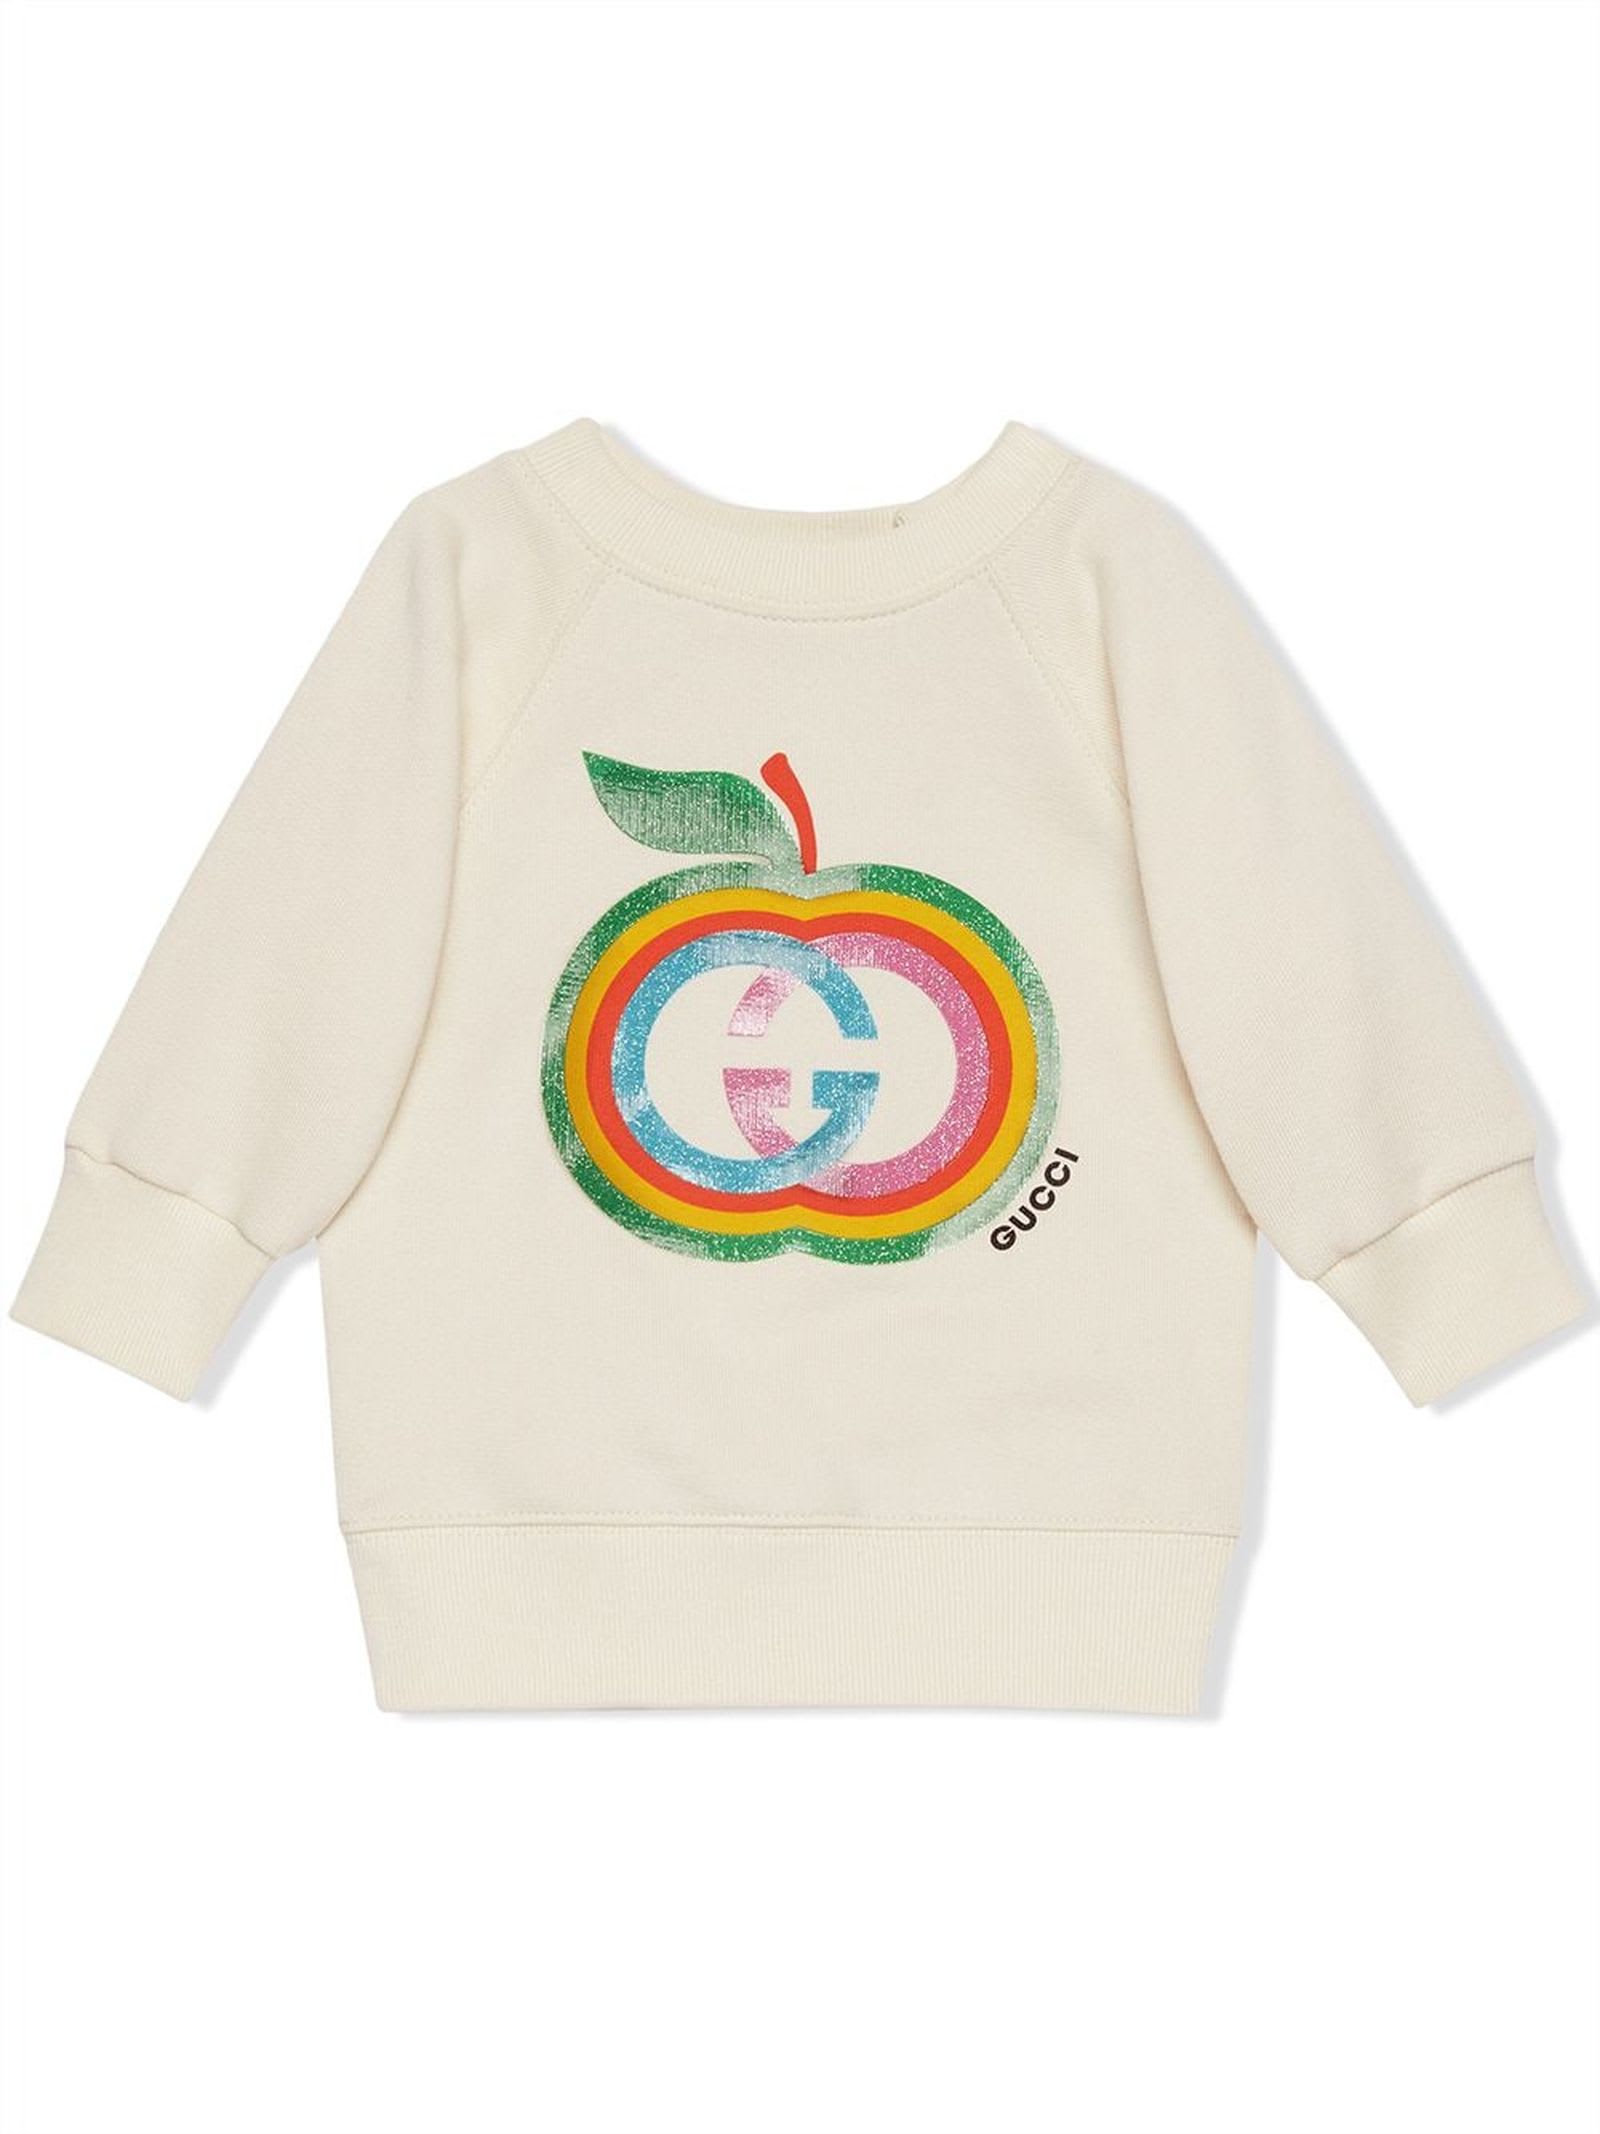 Gucci Baby Cotton Sweatshirt With Apple